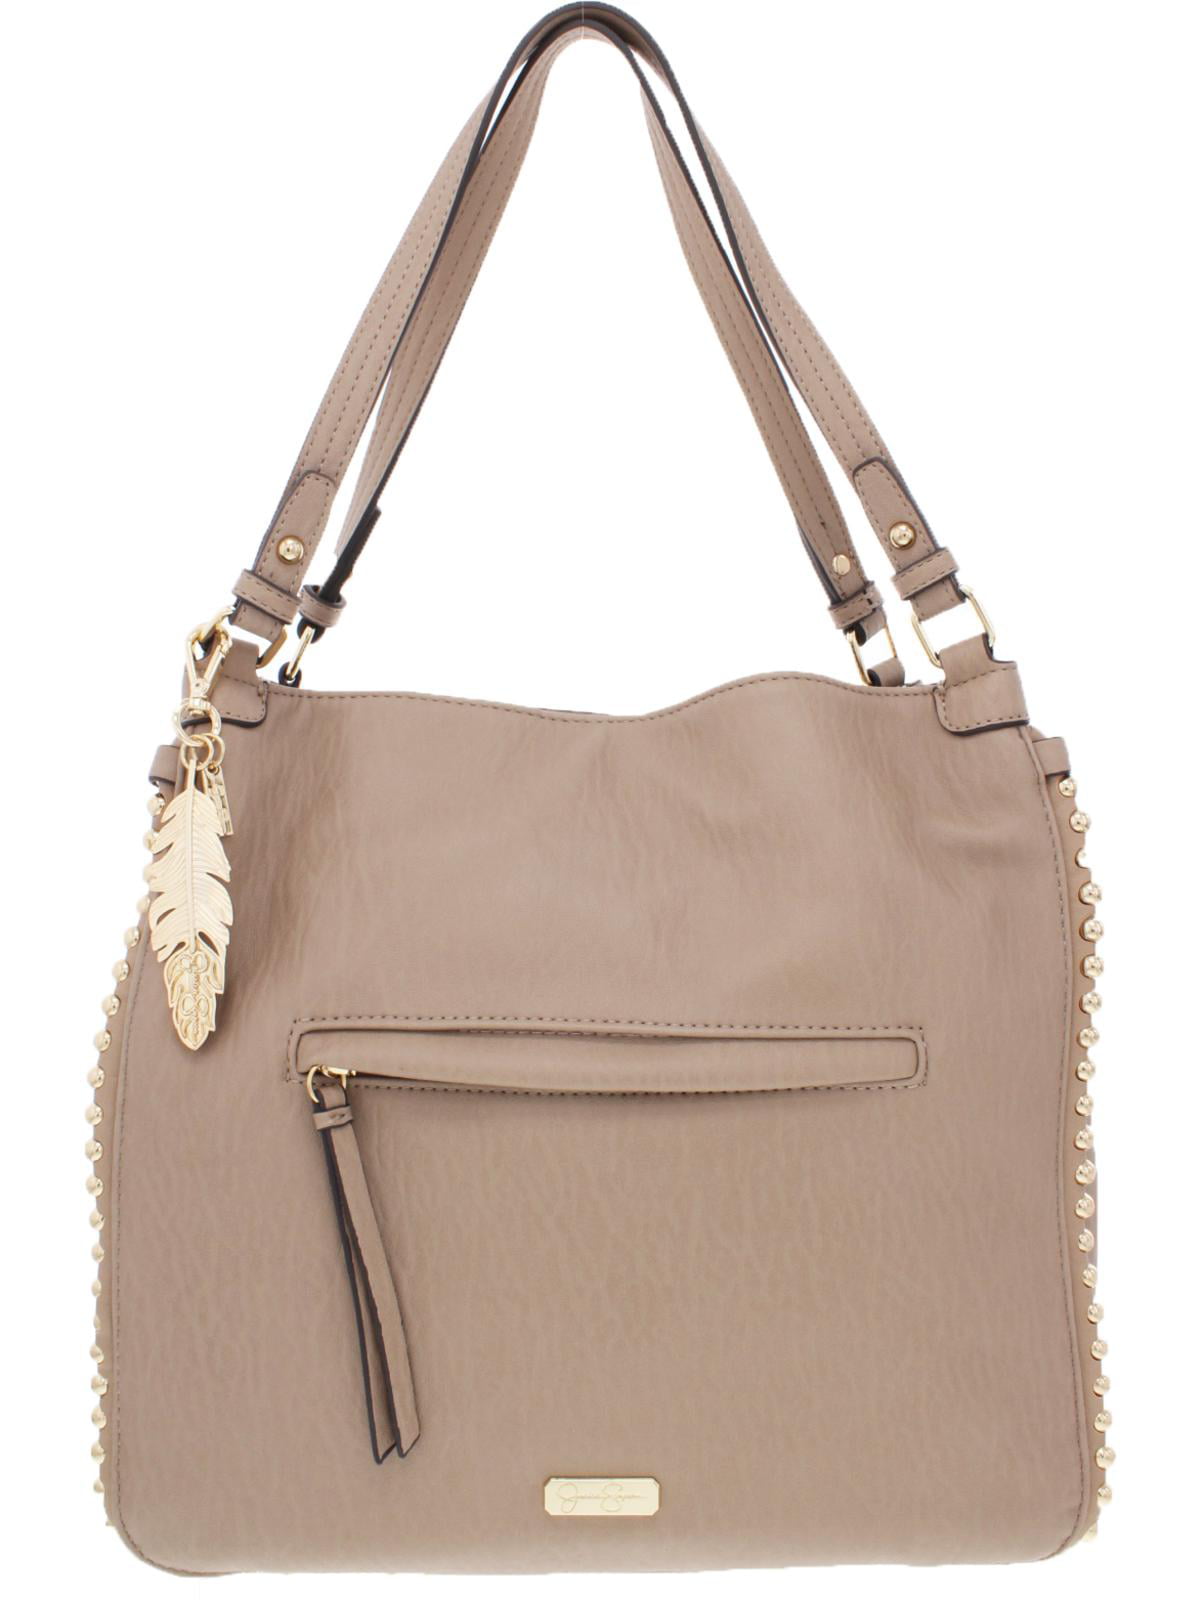 jessica simpson handbags